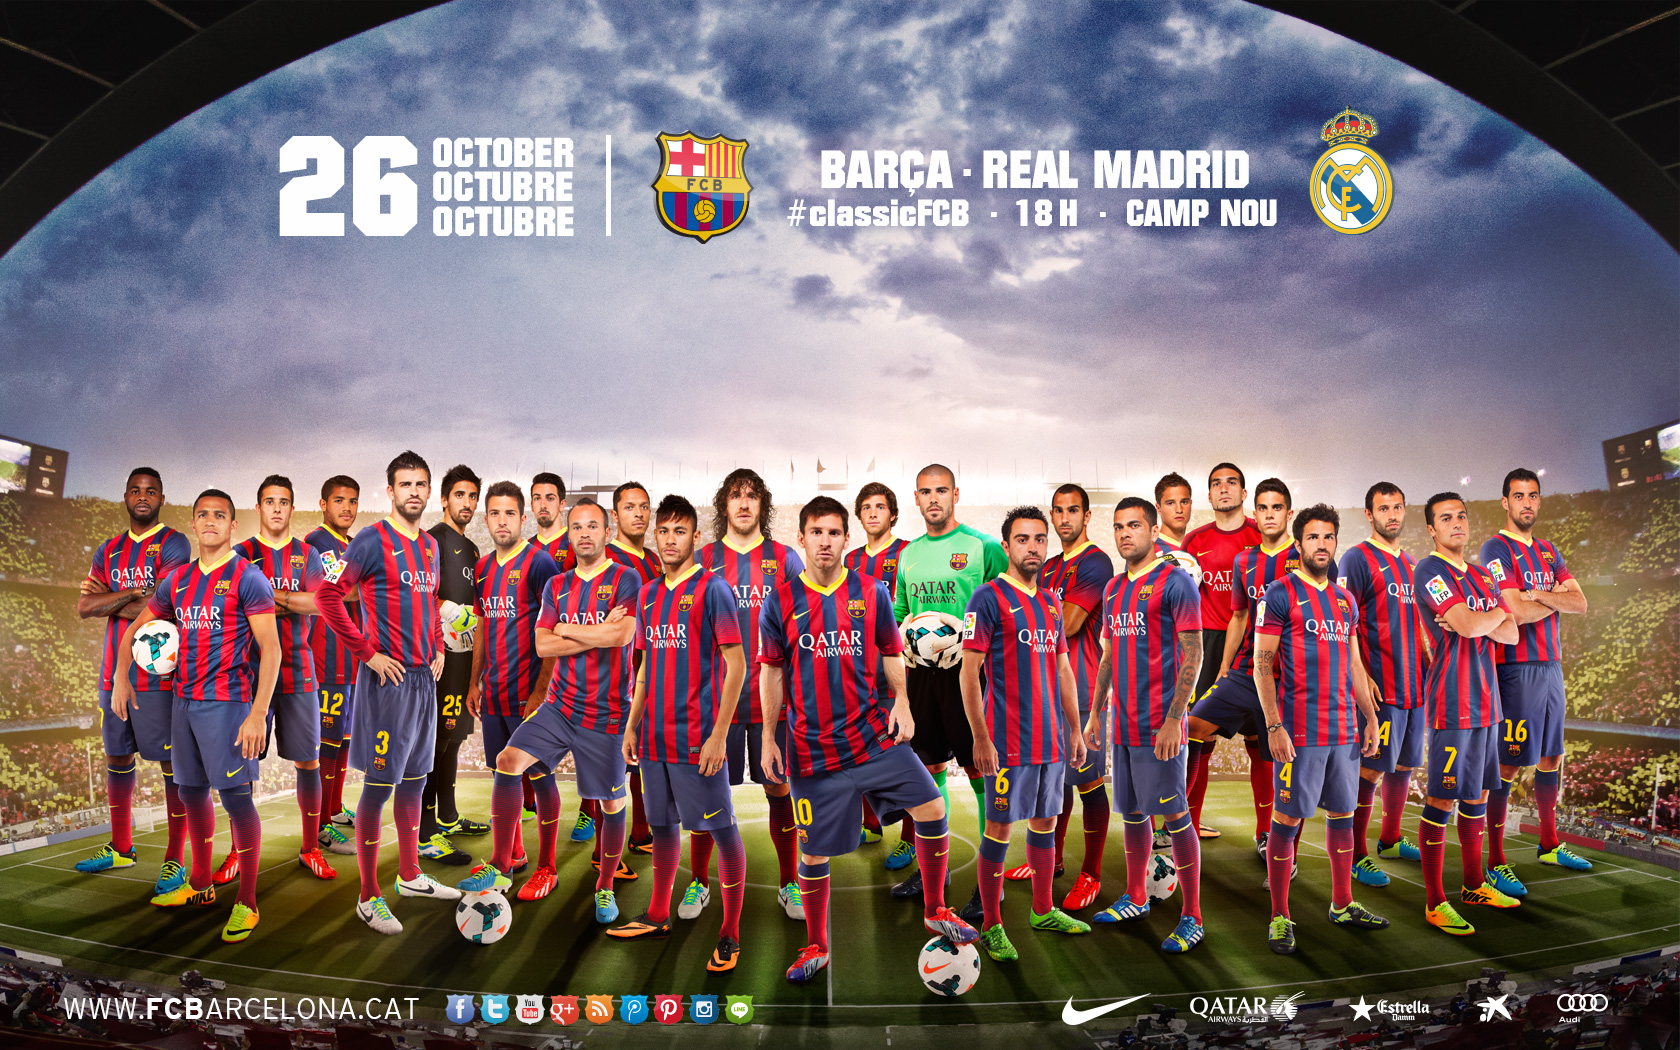 Los Fondos De Pantalla Del Clsico FC Barcelona Real Madrid FC